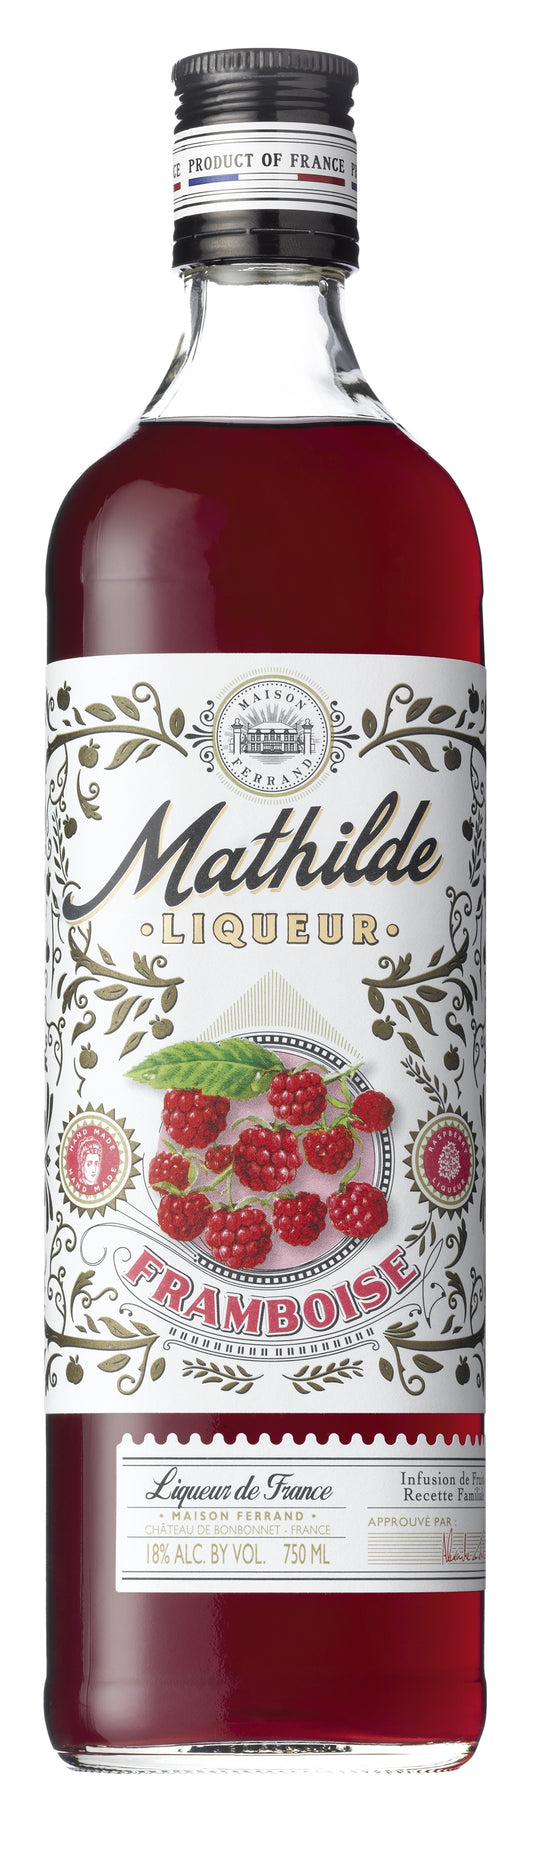 MATHILDE LIQUEUR FRAMBOISE ORIGINAL 750ML - Remedy Liquor